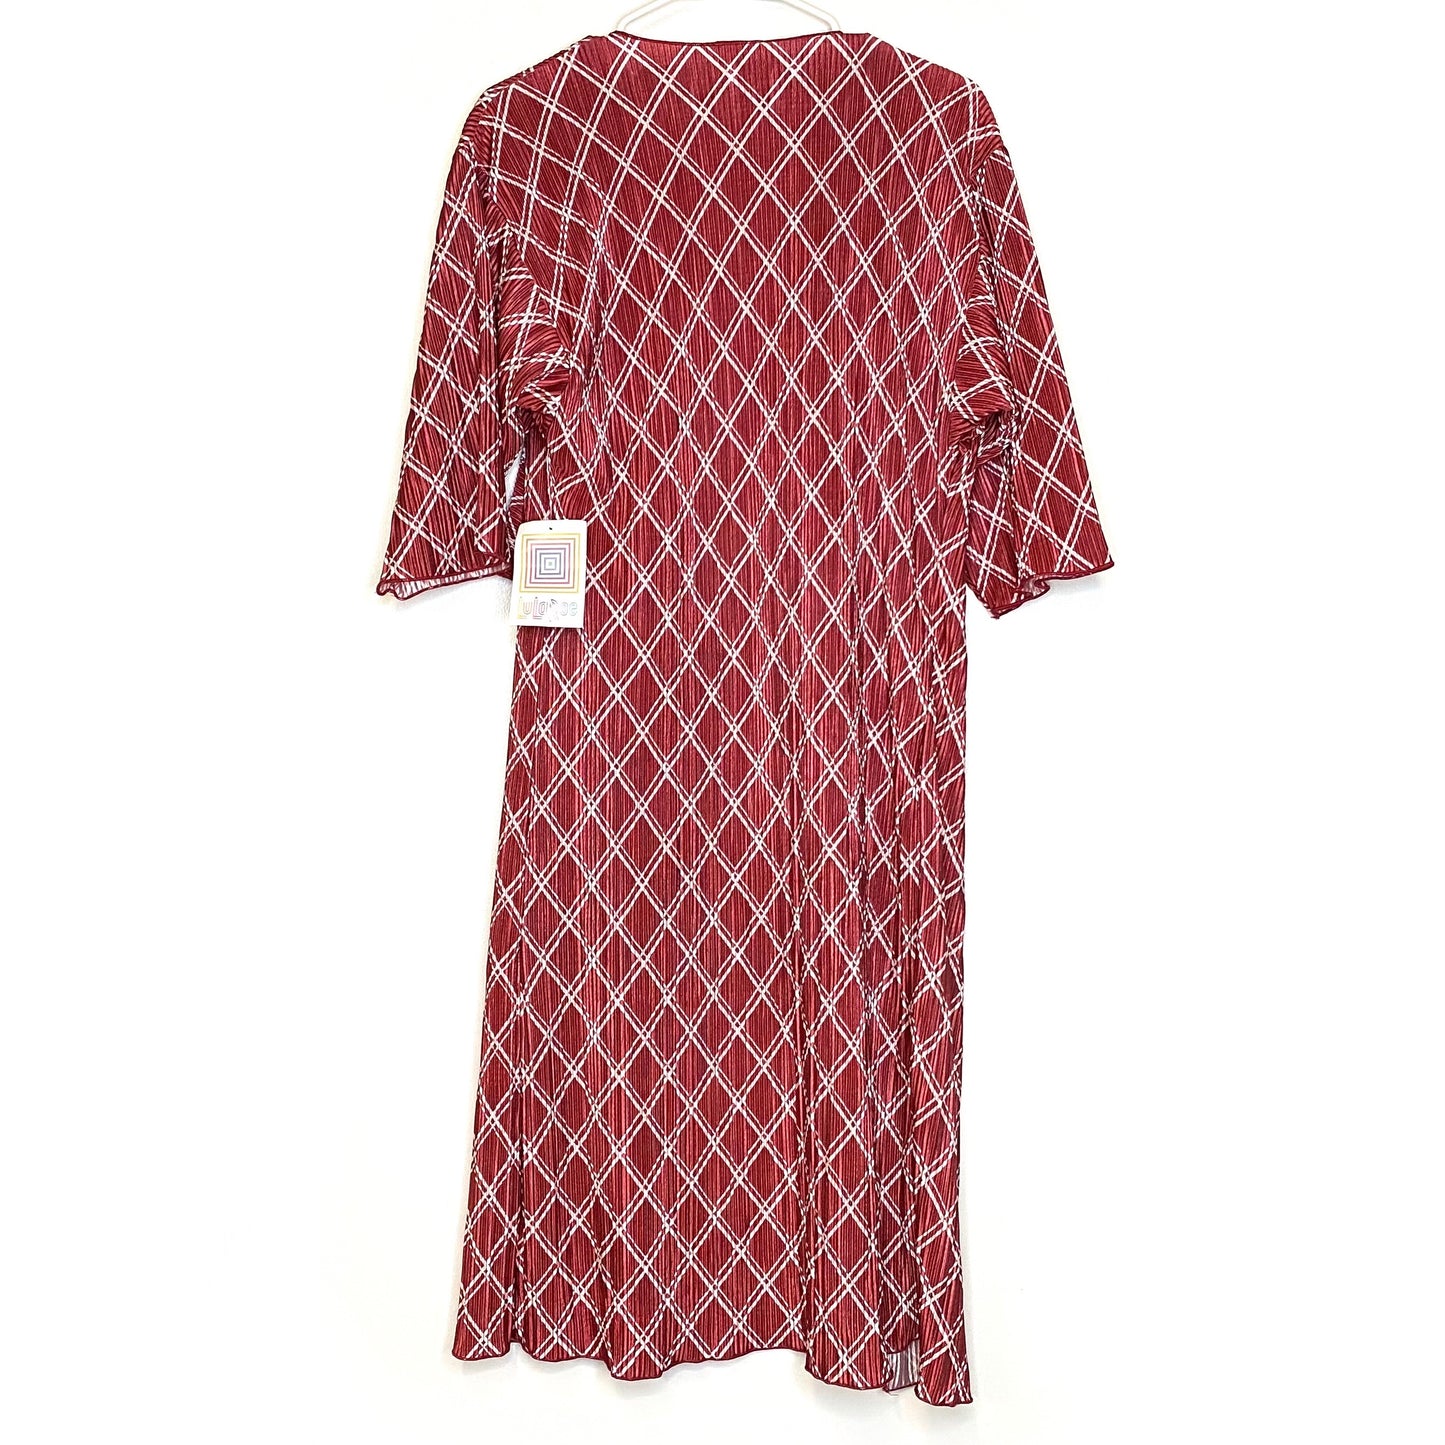 LuLaRoe Womens Size S Brick Red/White Accordion Windowpane Check Kimono Cover Up L/s NWT